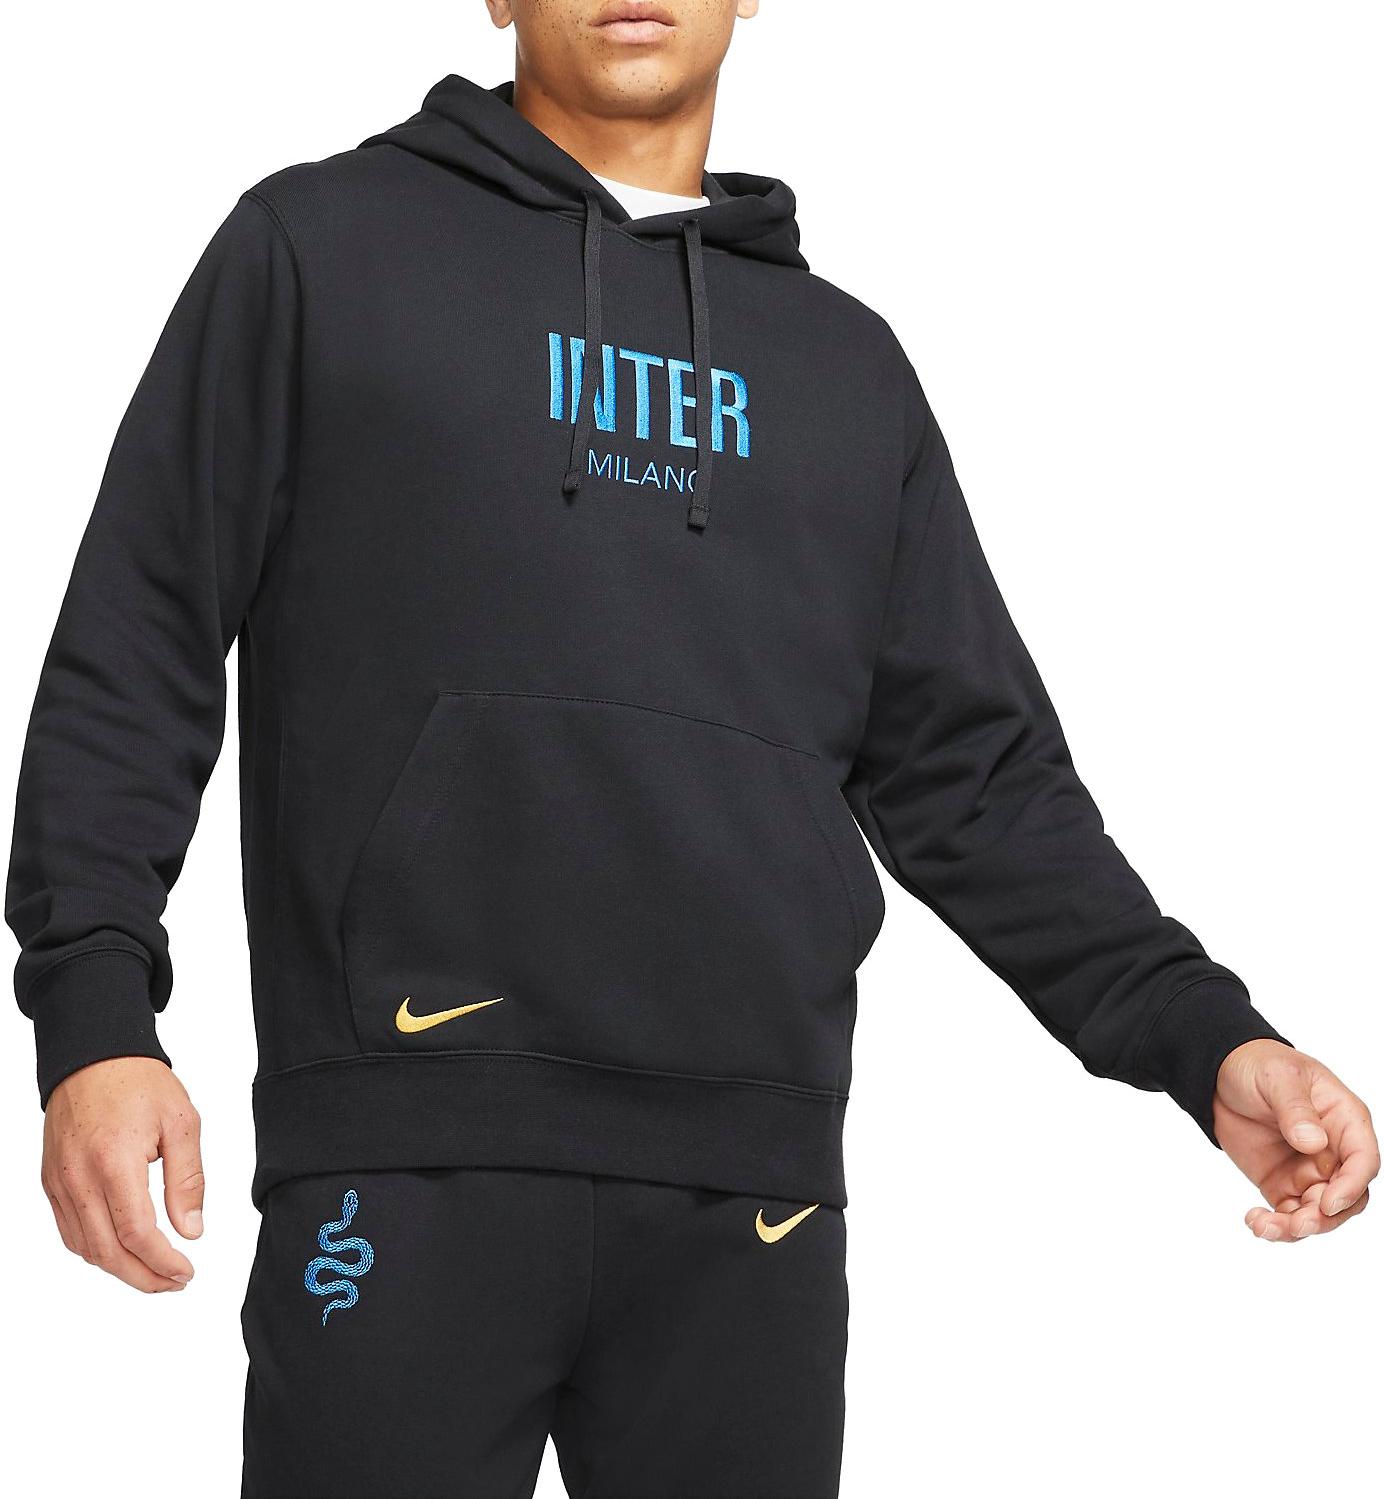 Hooded sweatshirt Nike Inter Milan Men s Fleece Soccer Hoodie